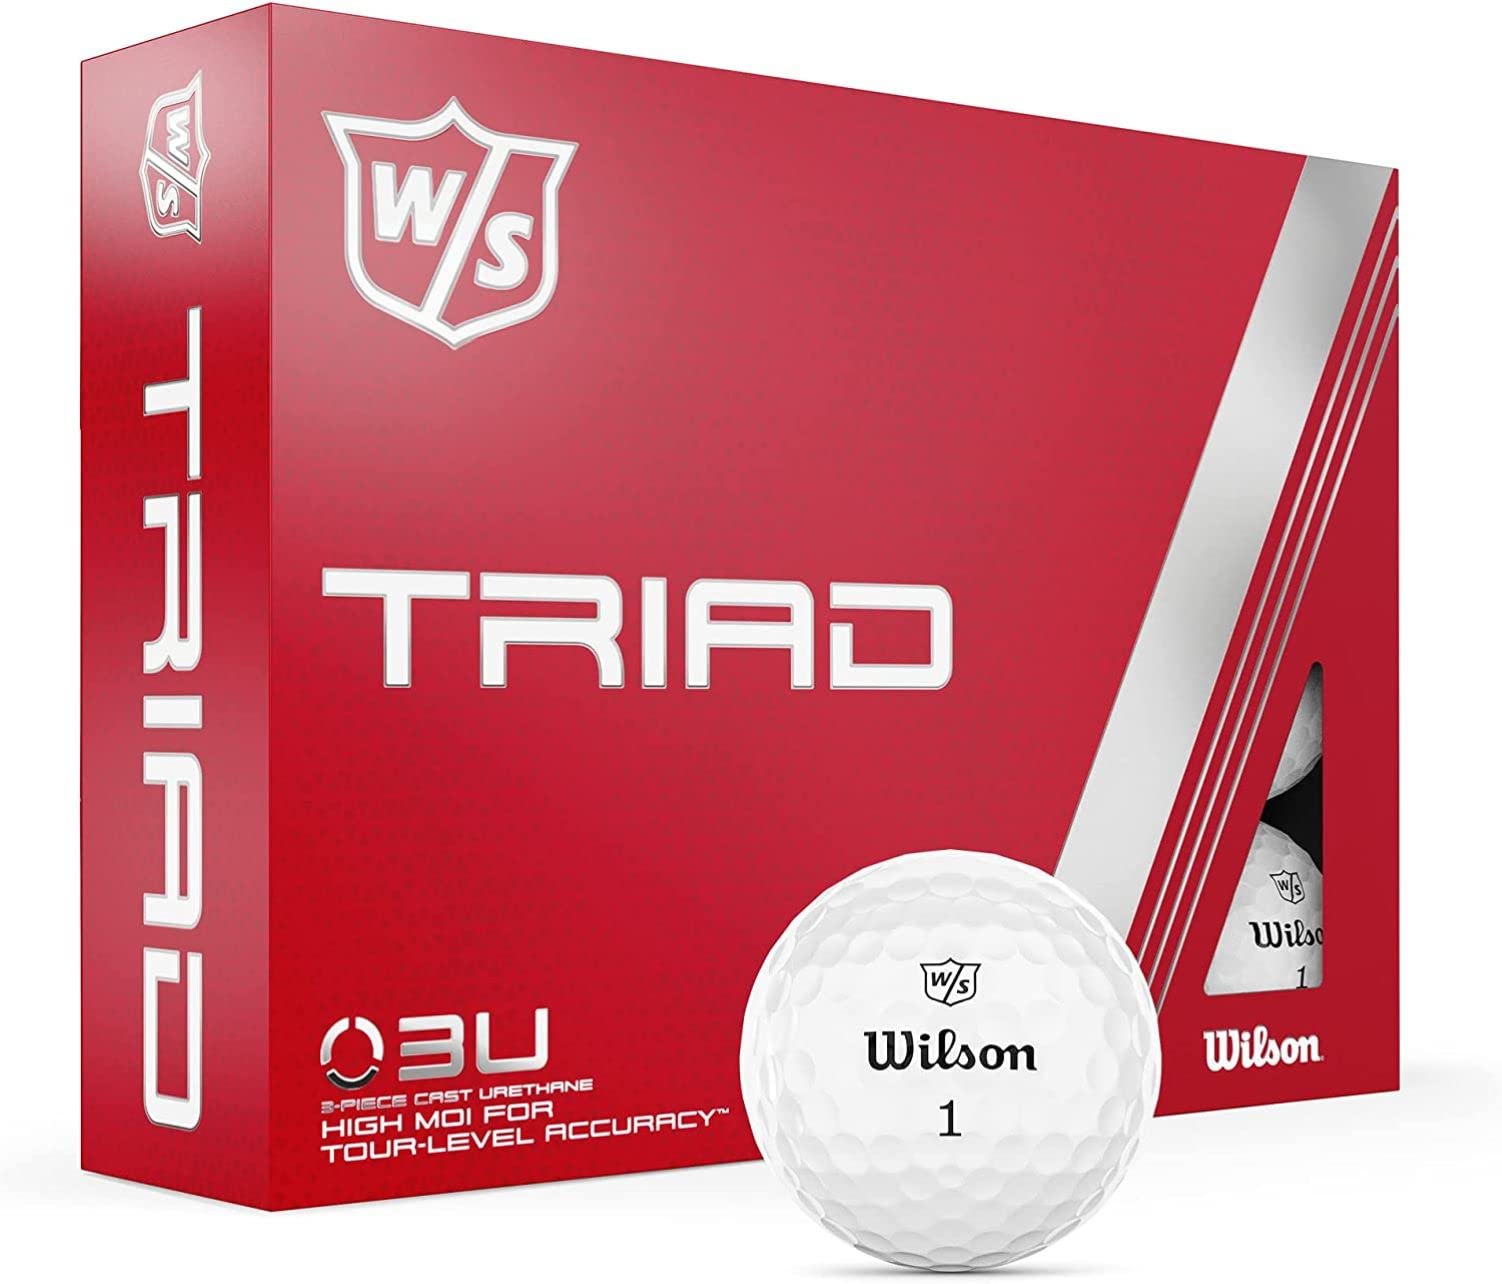 $25.33: 12-Pack Wilson Staff Triad Golf Balls at Amazon ($2.11 / ball)